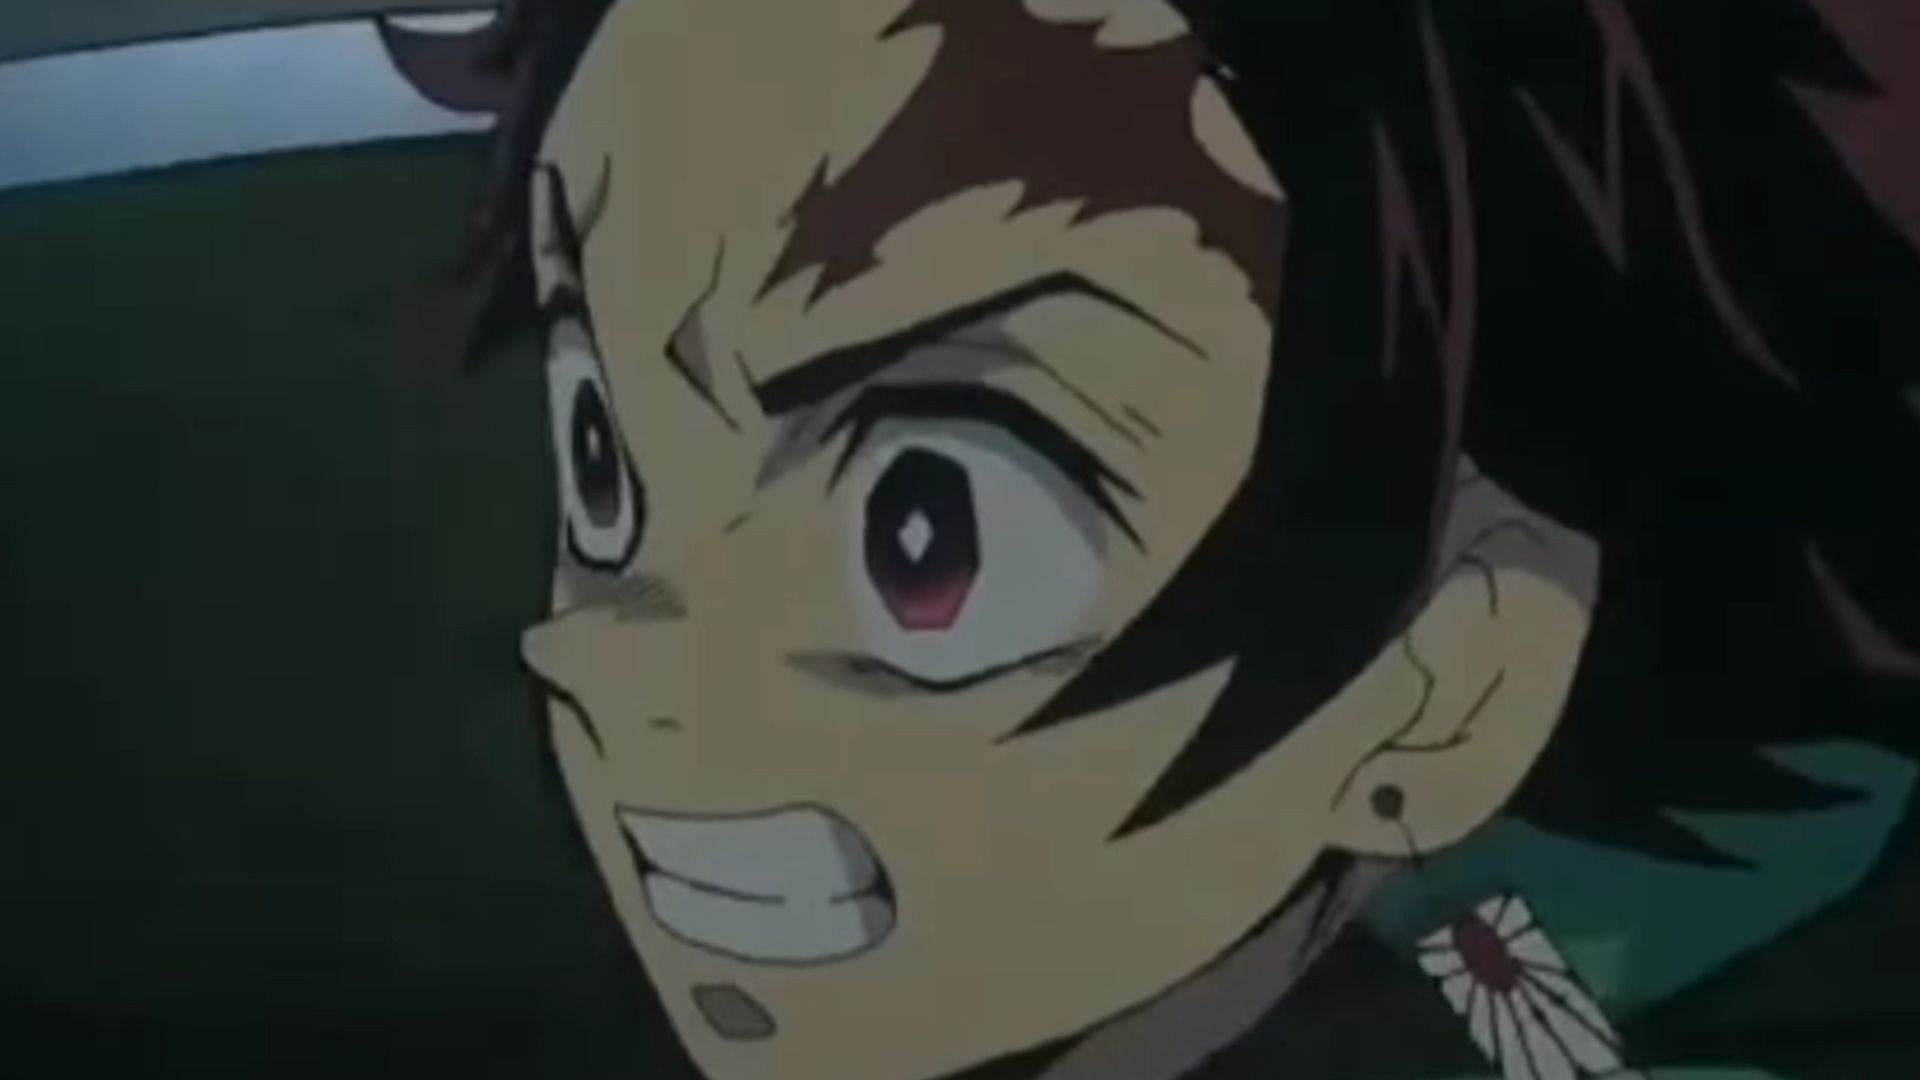 𝚃𝚊𝚗𝚓𝚒𝚛𝚘𝚞꧂ | Anime demon, Anime eyes, Black clover anime